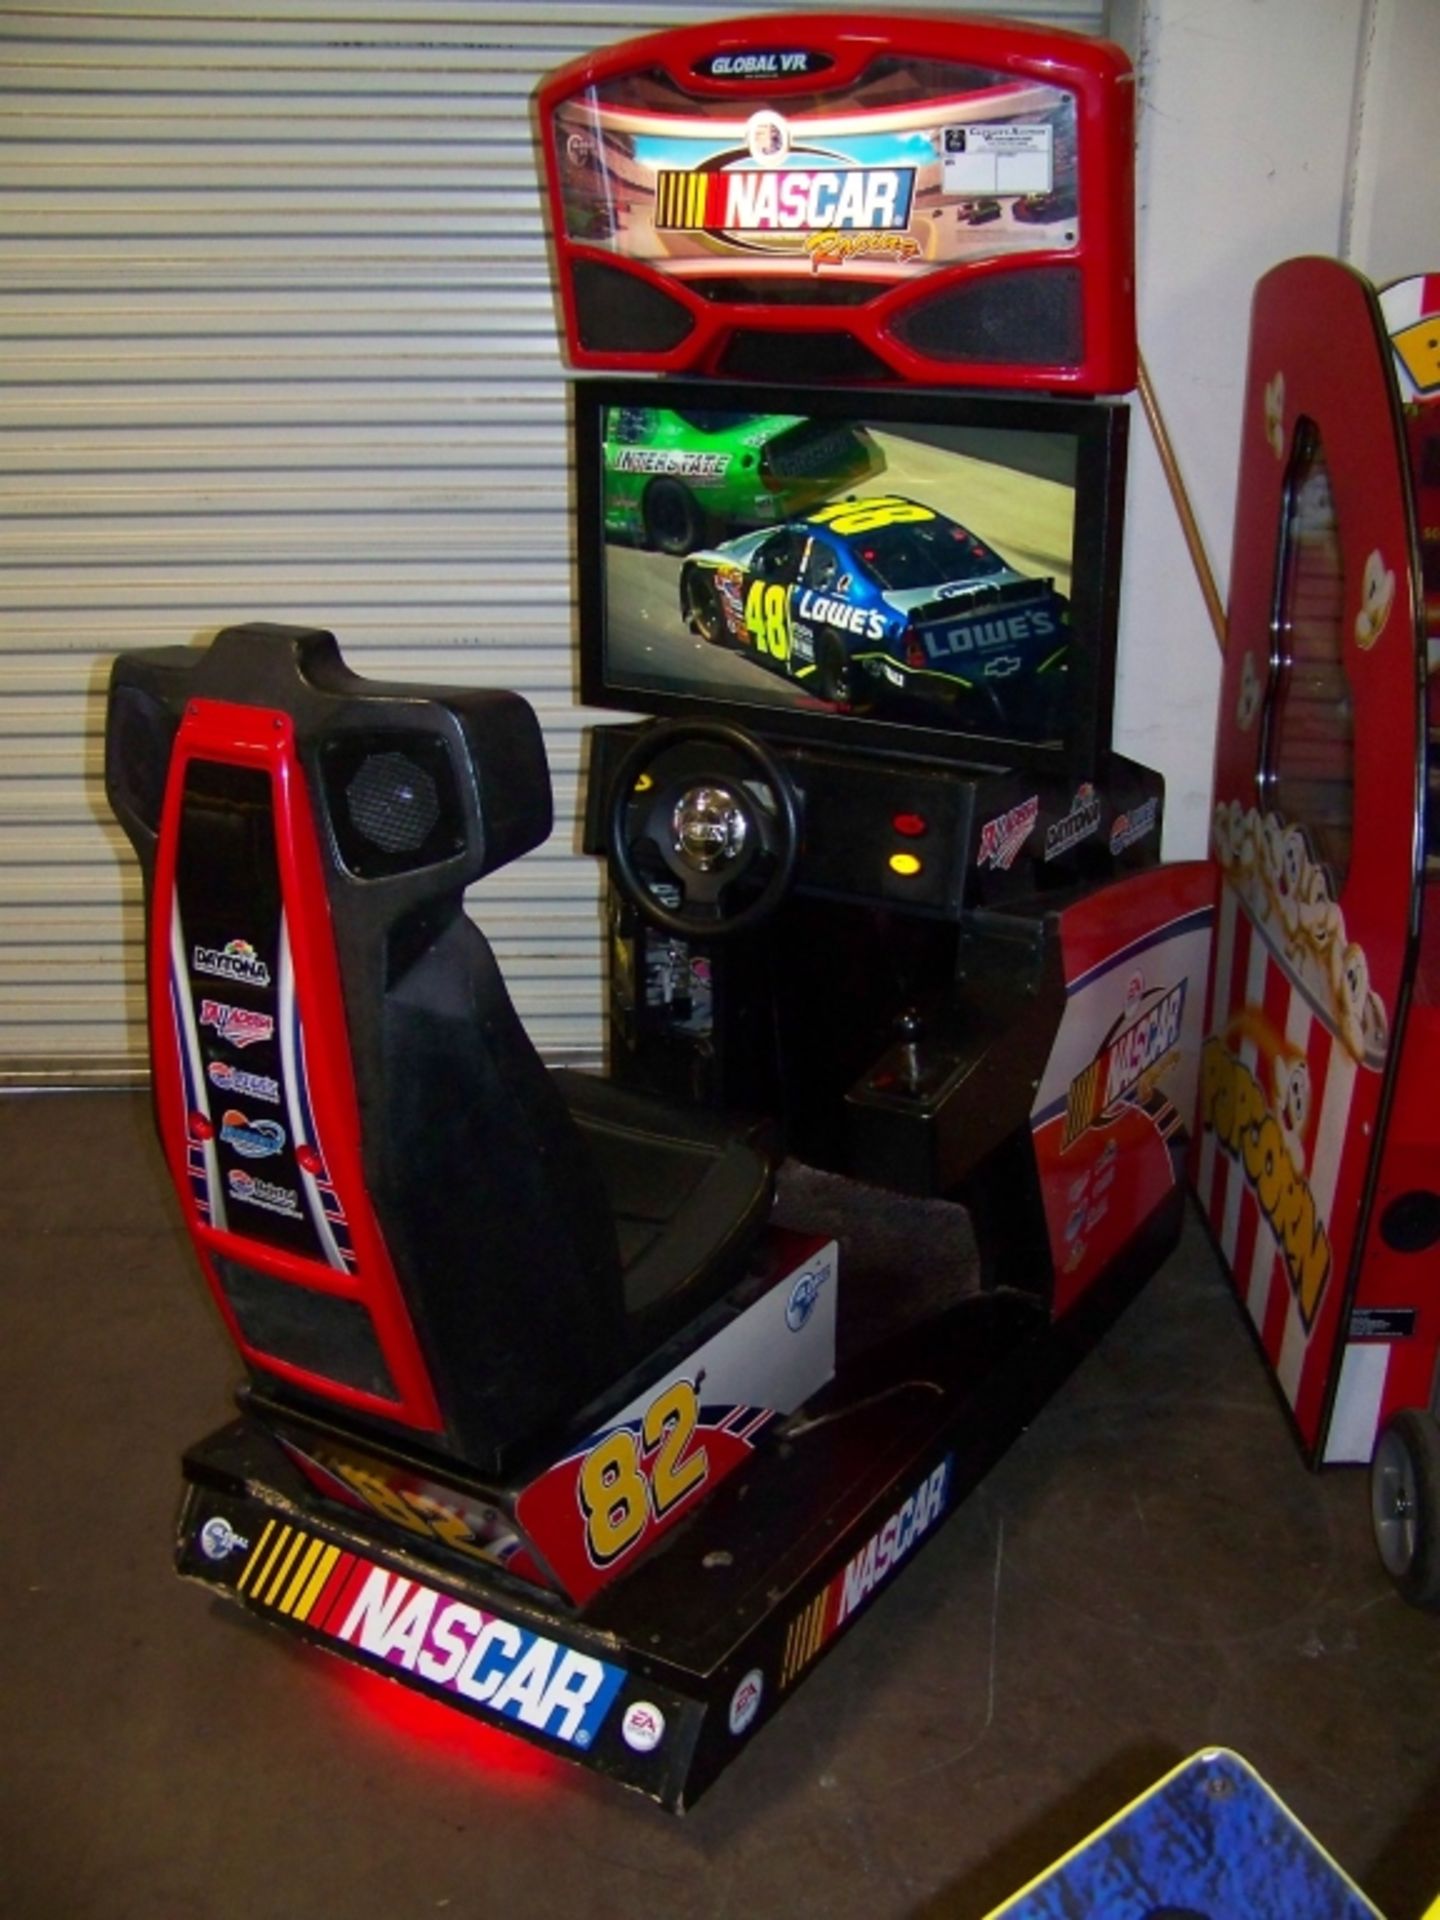 NASCAR RACING ARCADE GAME GLOBAL VR 32" LCD - Image 2 of 7